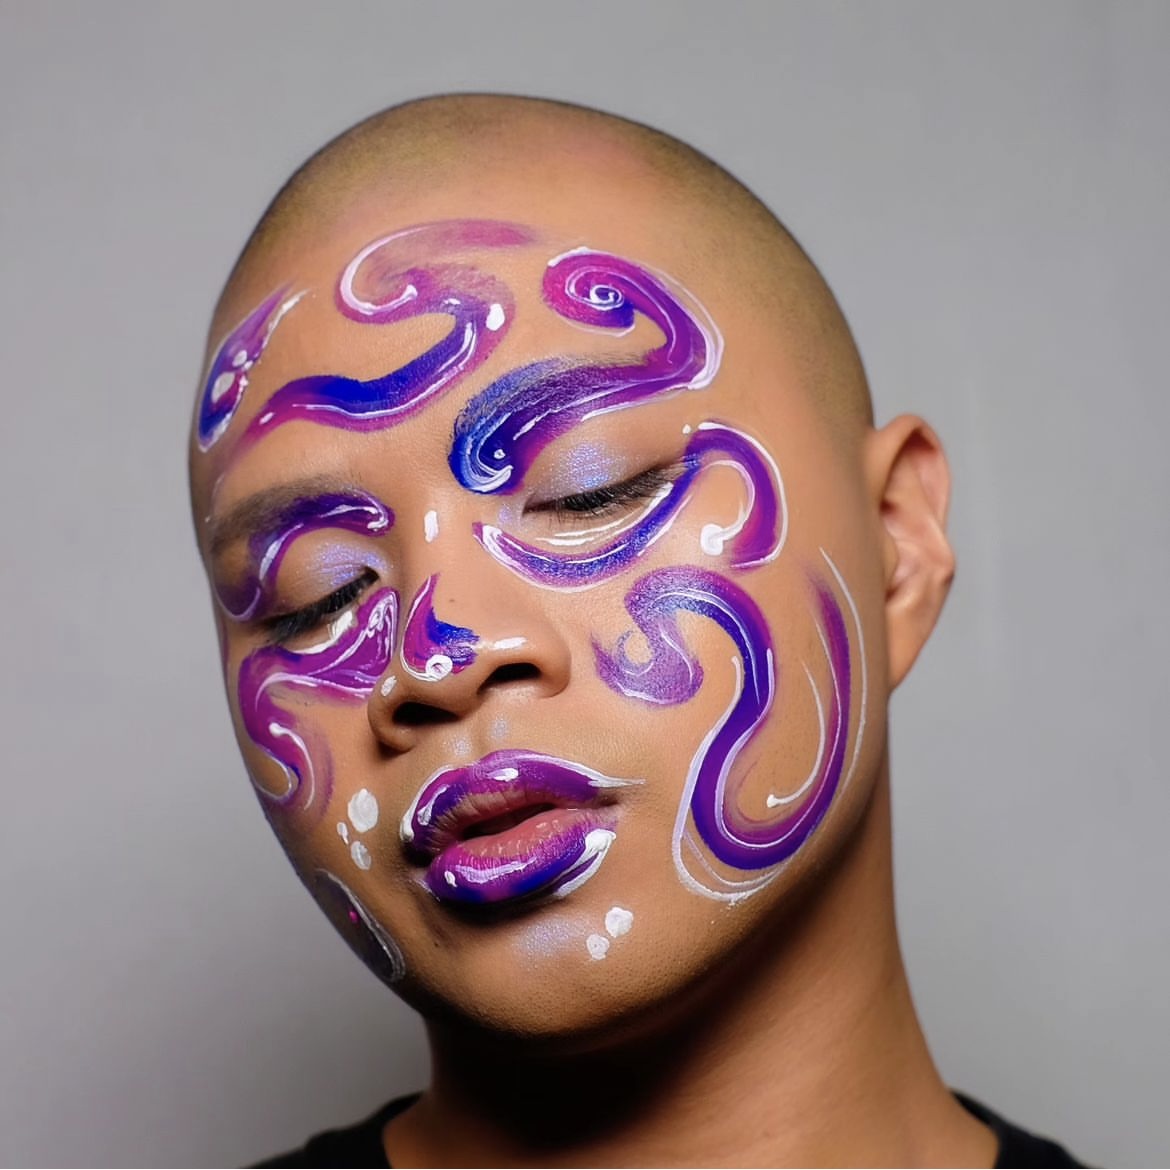 gerry doctora creative makeup artist